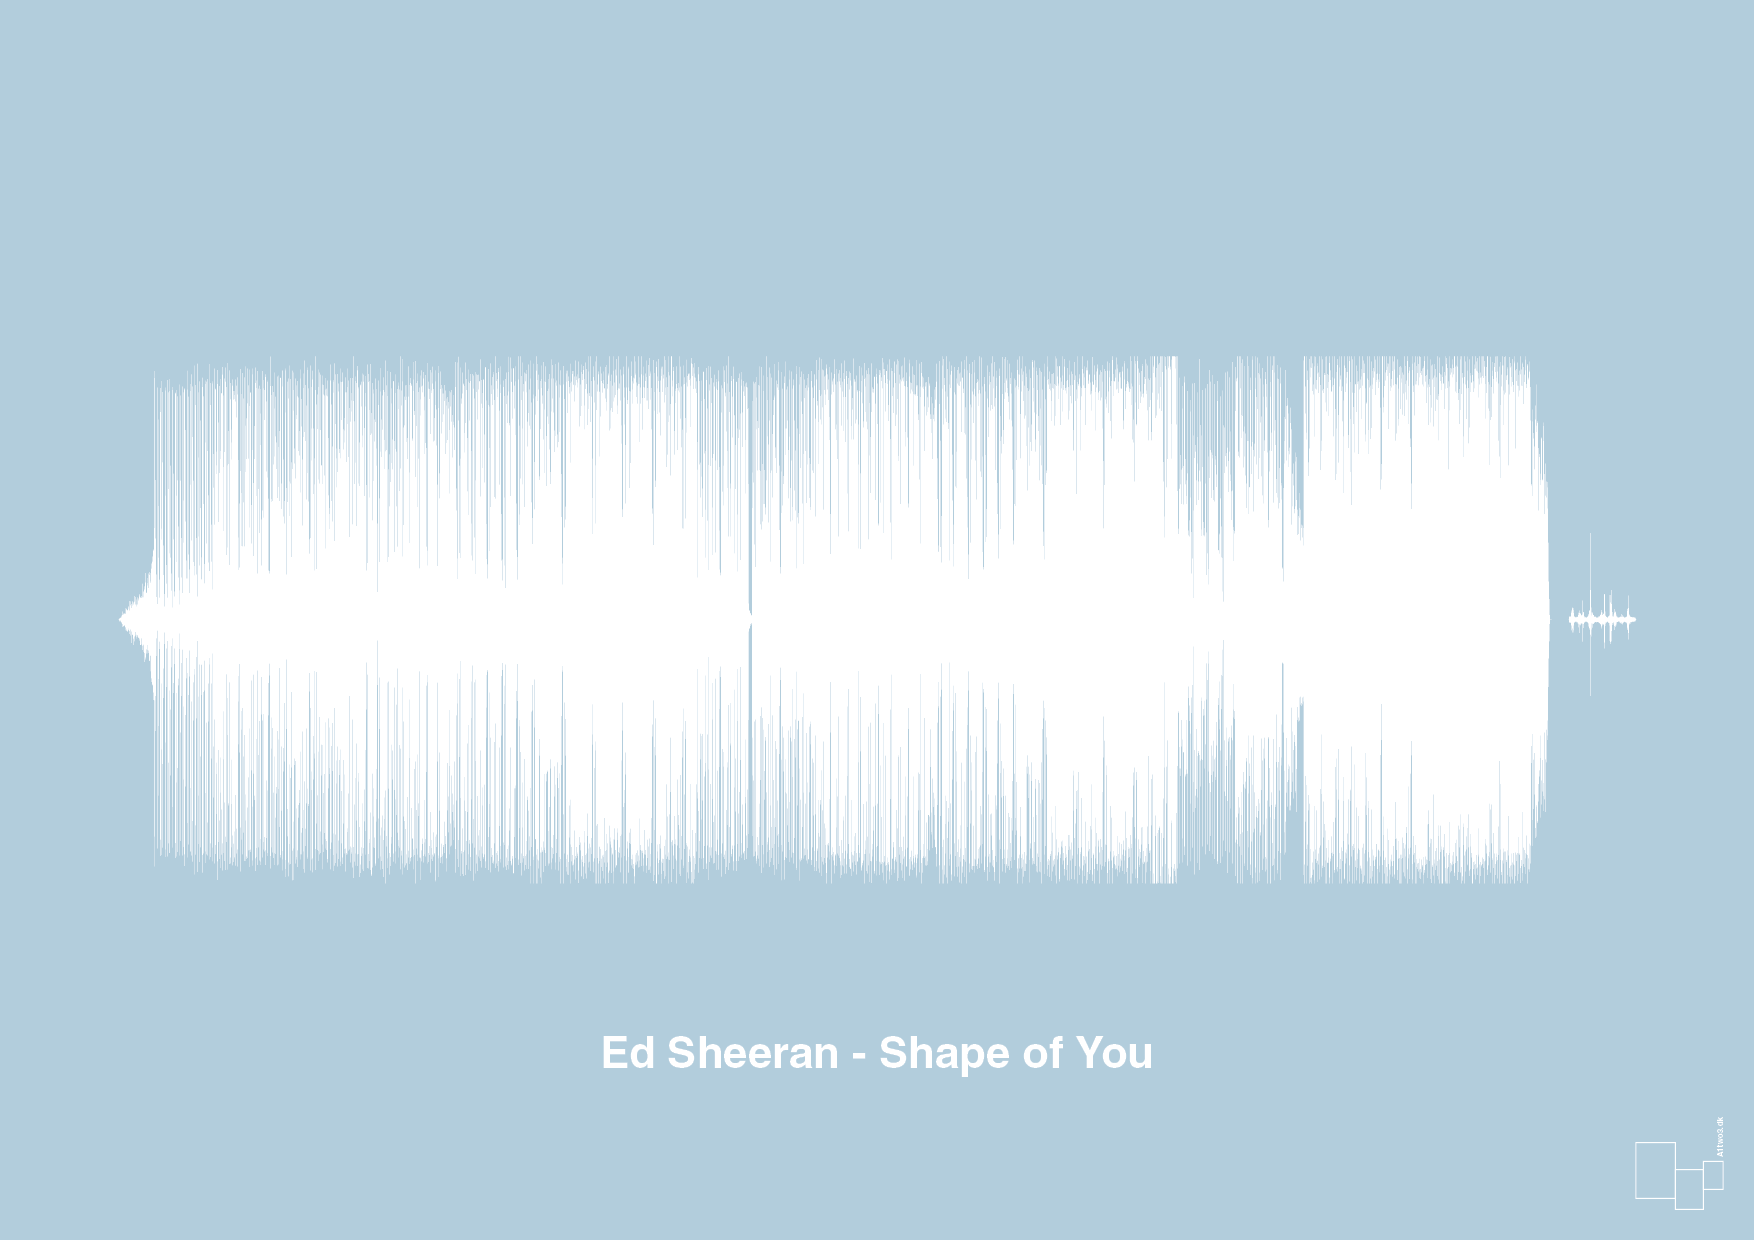 ed sheeran - shape of you - Plakat med Musik i Heavenly Blue